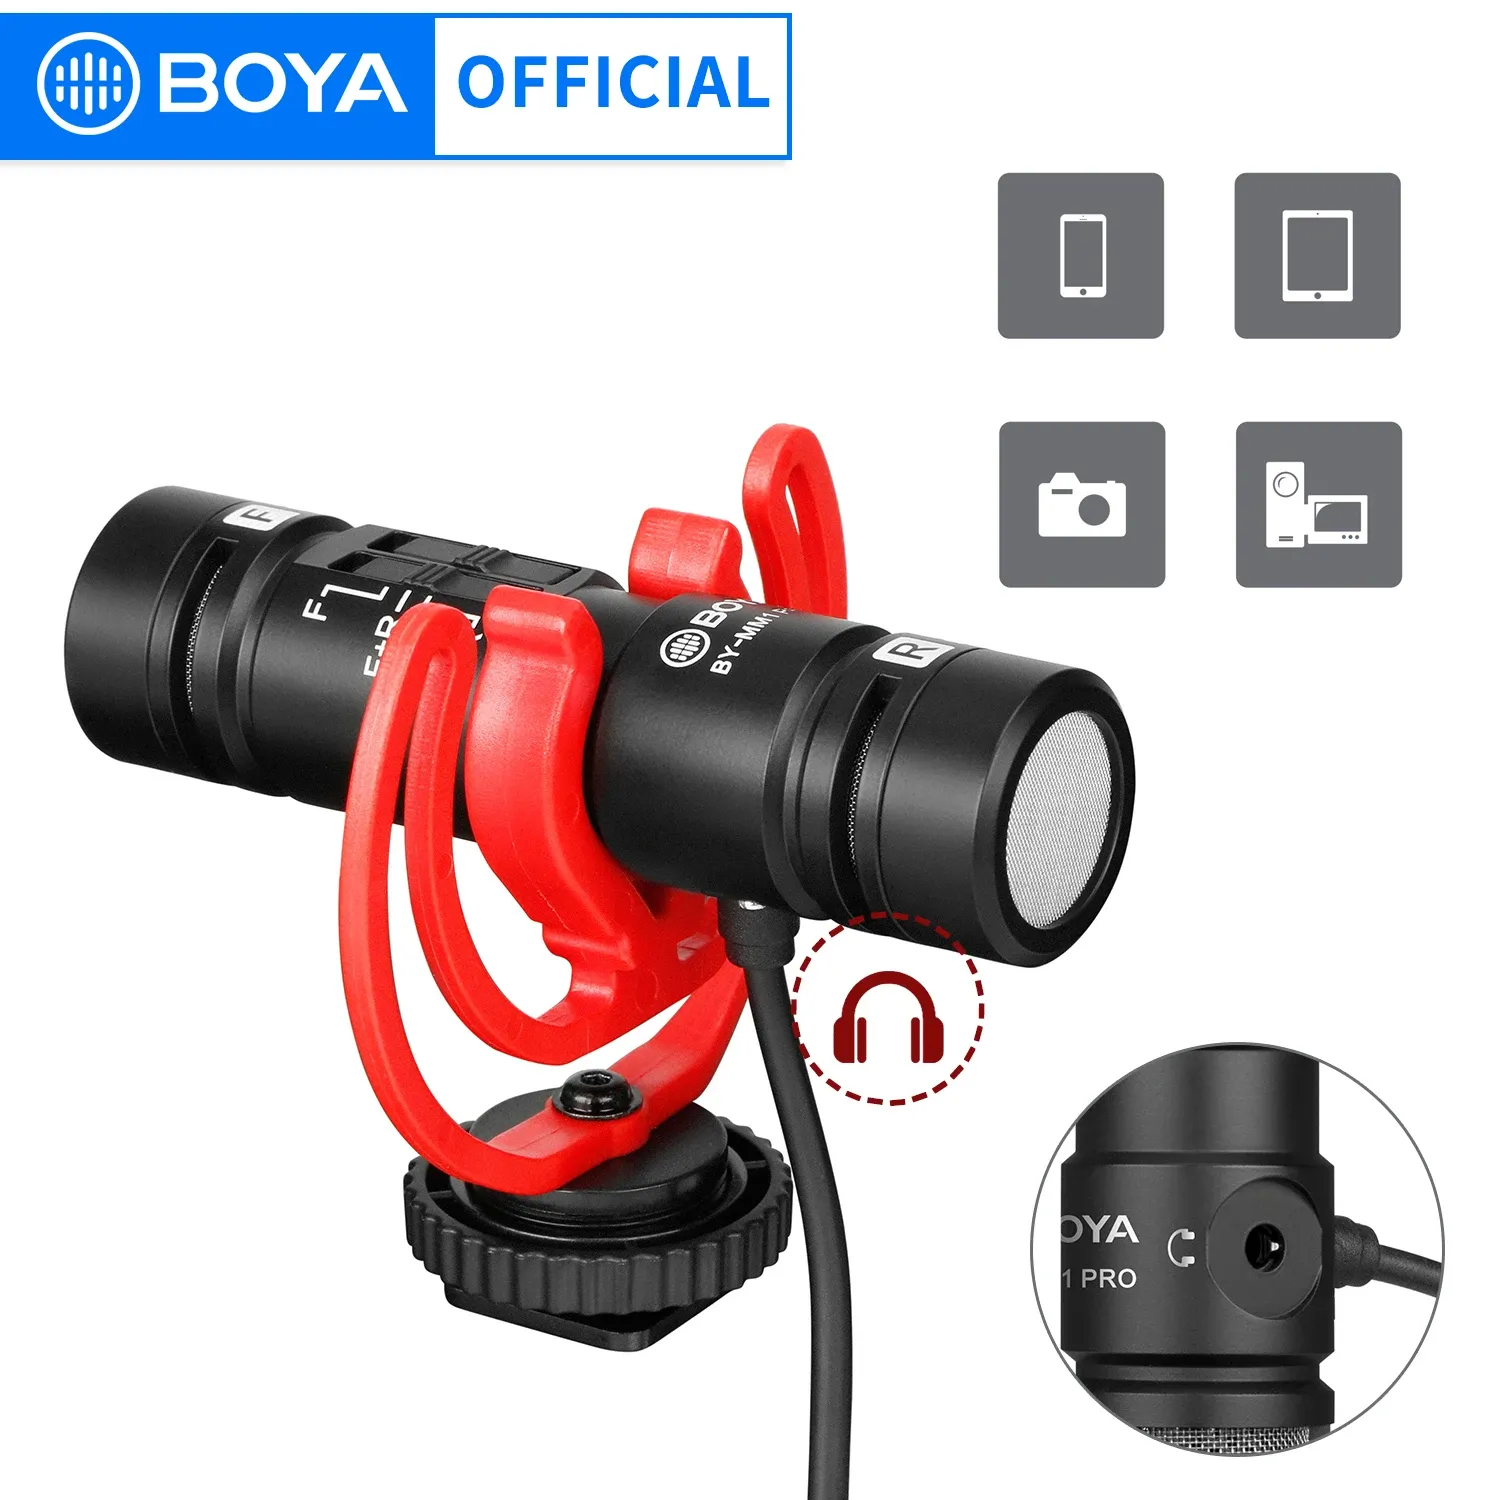 Onderdelen Boya bymm1 pro dualcapsule condensor shotgun microfoon video microfoon voor iPhone Android smartphone camera tablet camcorder pc